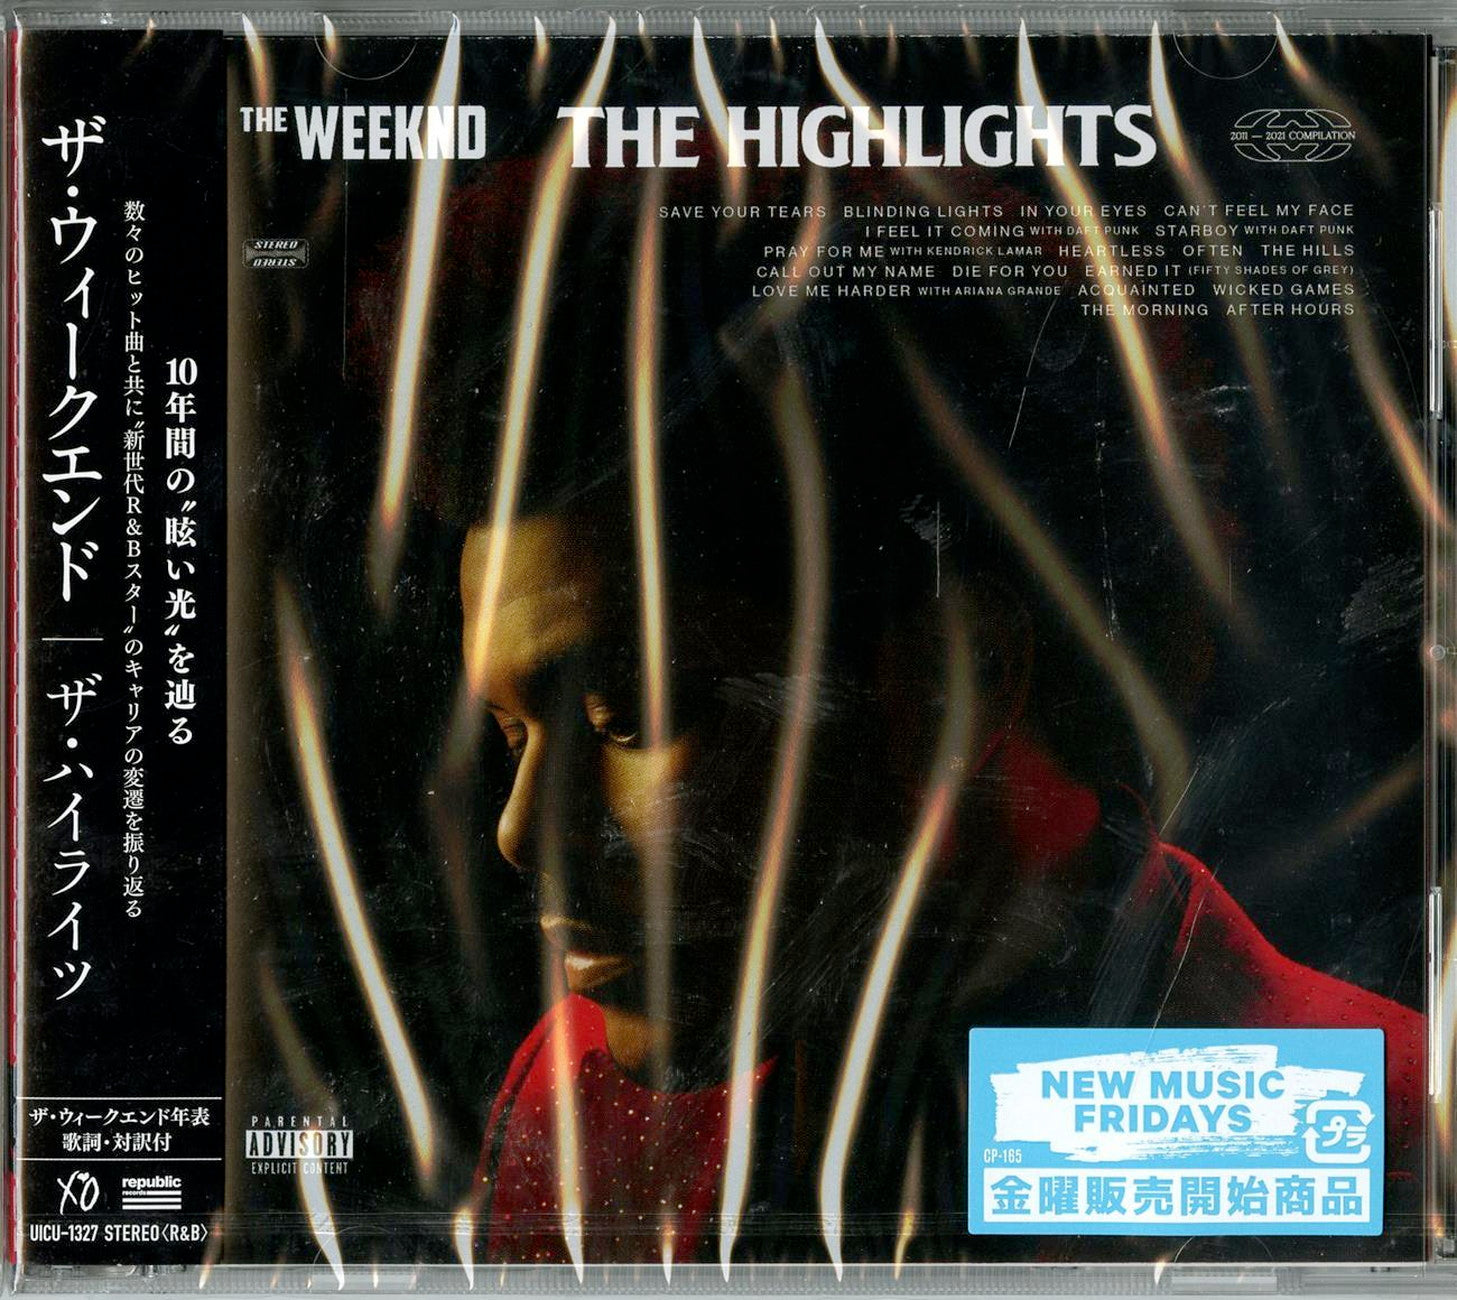 The Weeknd - The Highlights - Japan CD+Book – CDs Vinyl Japan